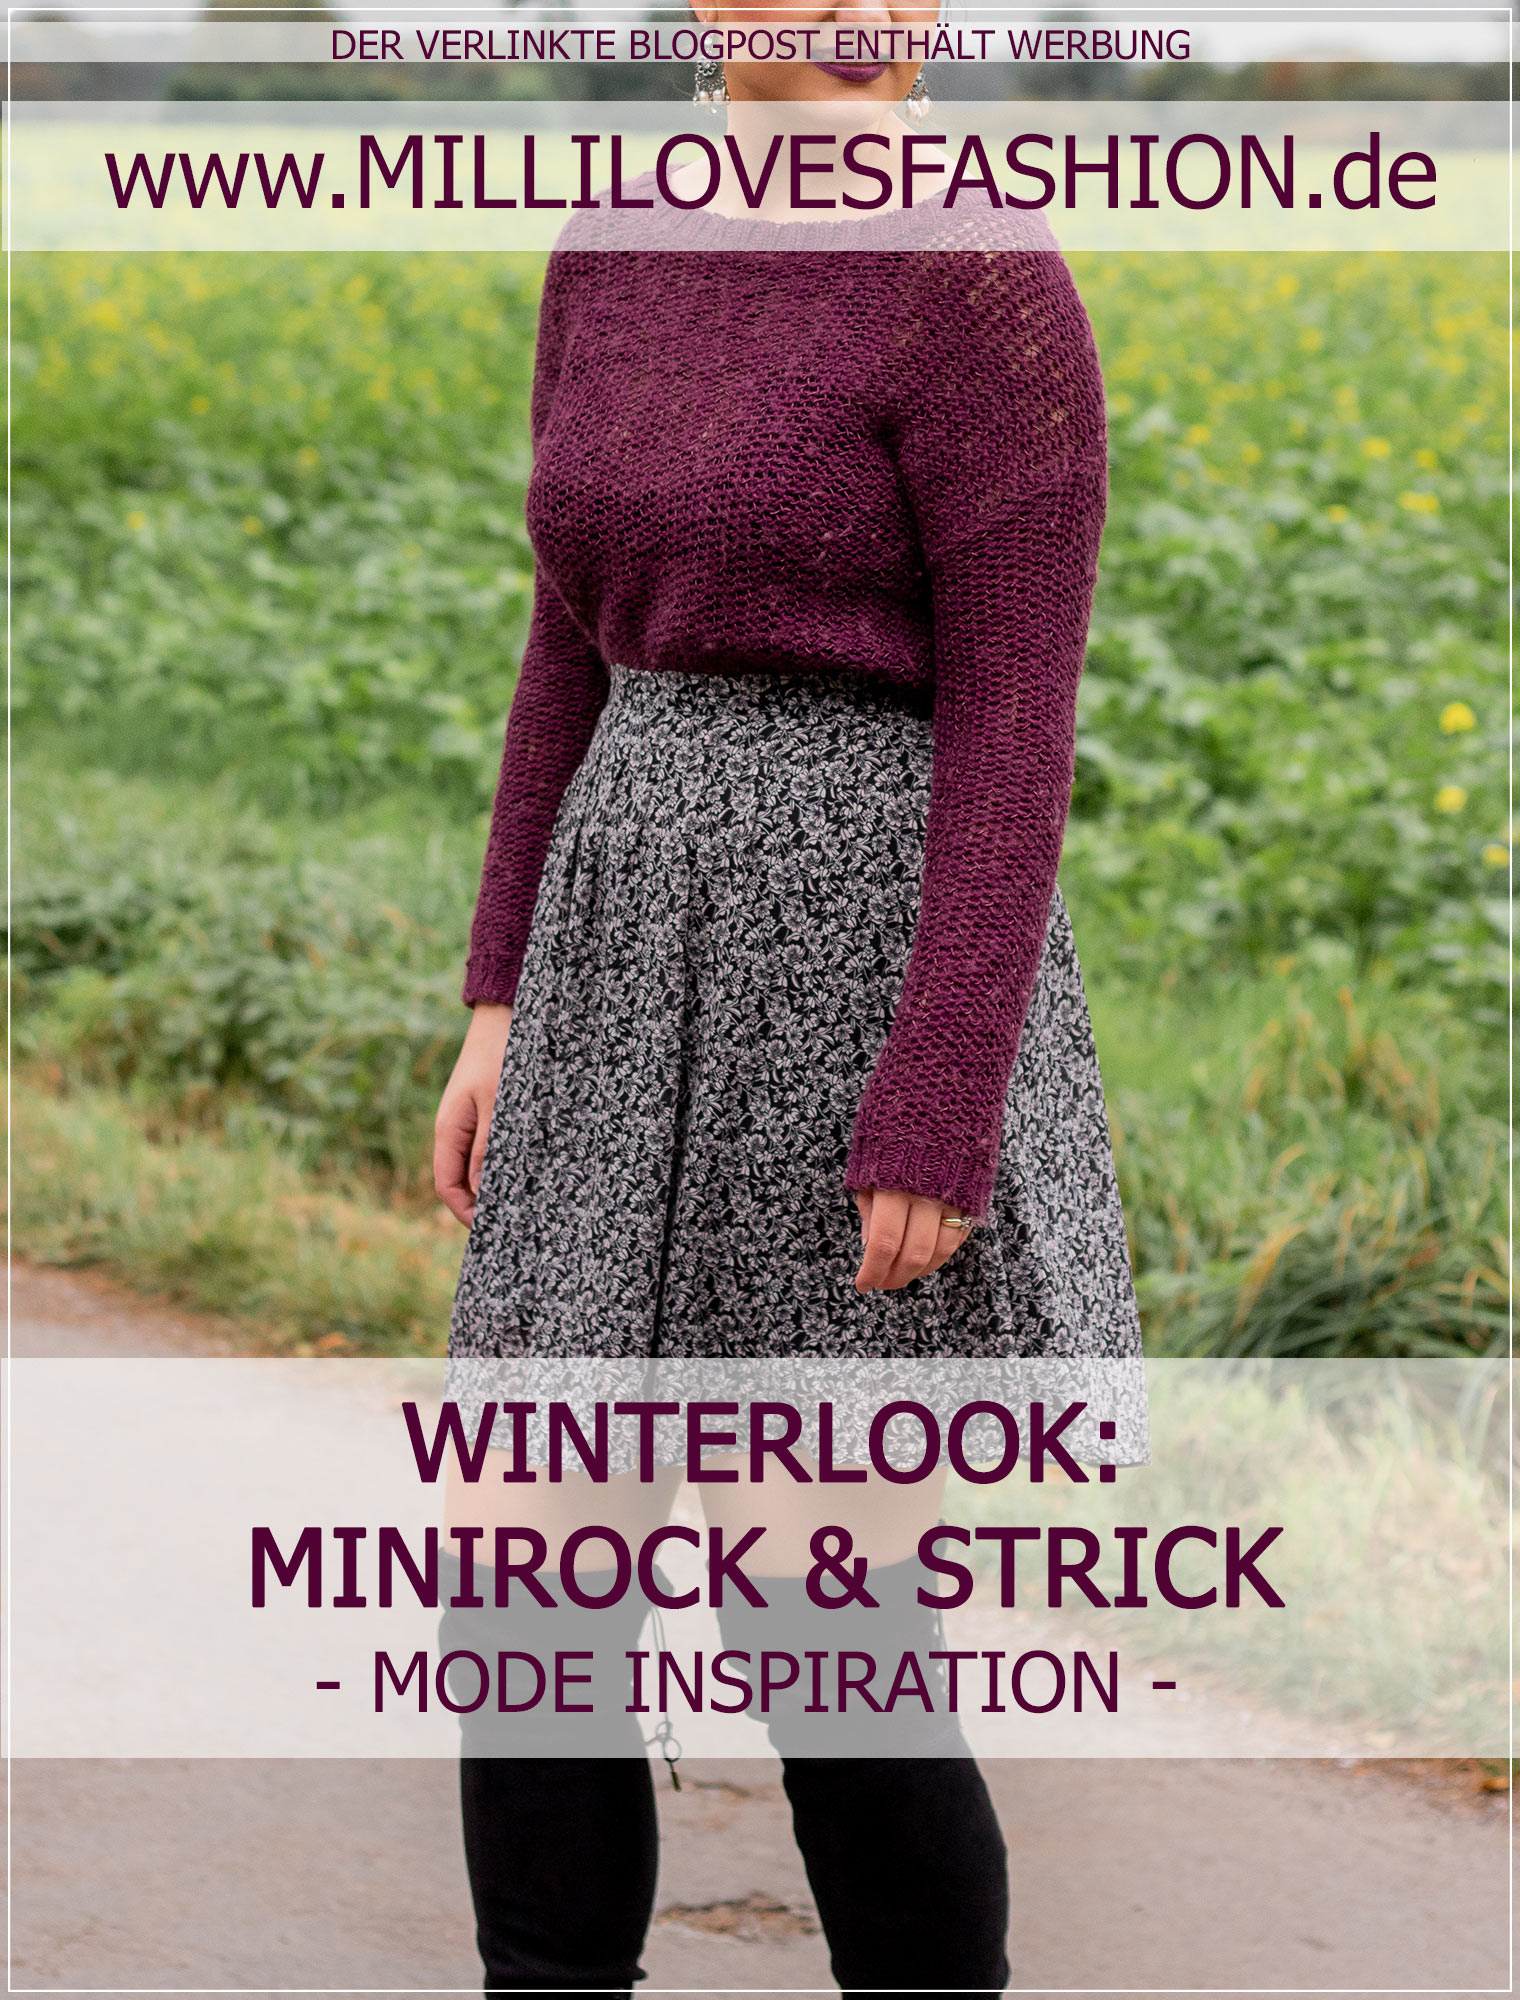 Strick, Minirock und Overknees im Winter kombinieren